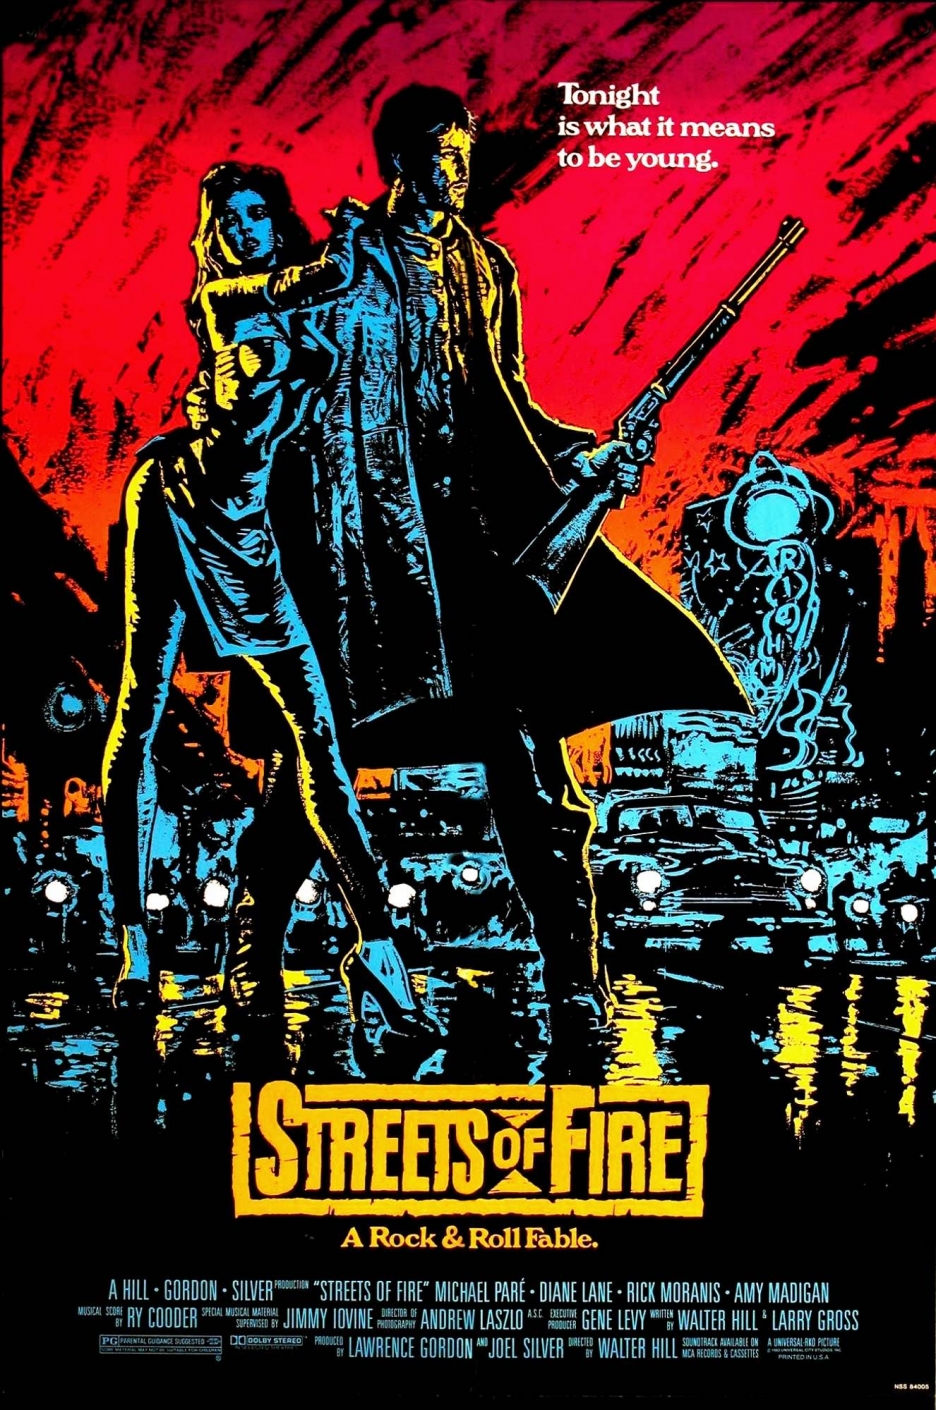 Nonton film Streets of Fire layarkaca21 indoxx1 ganool online streaming terbaru